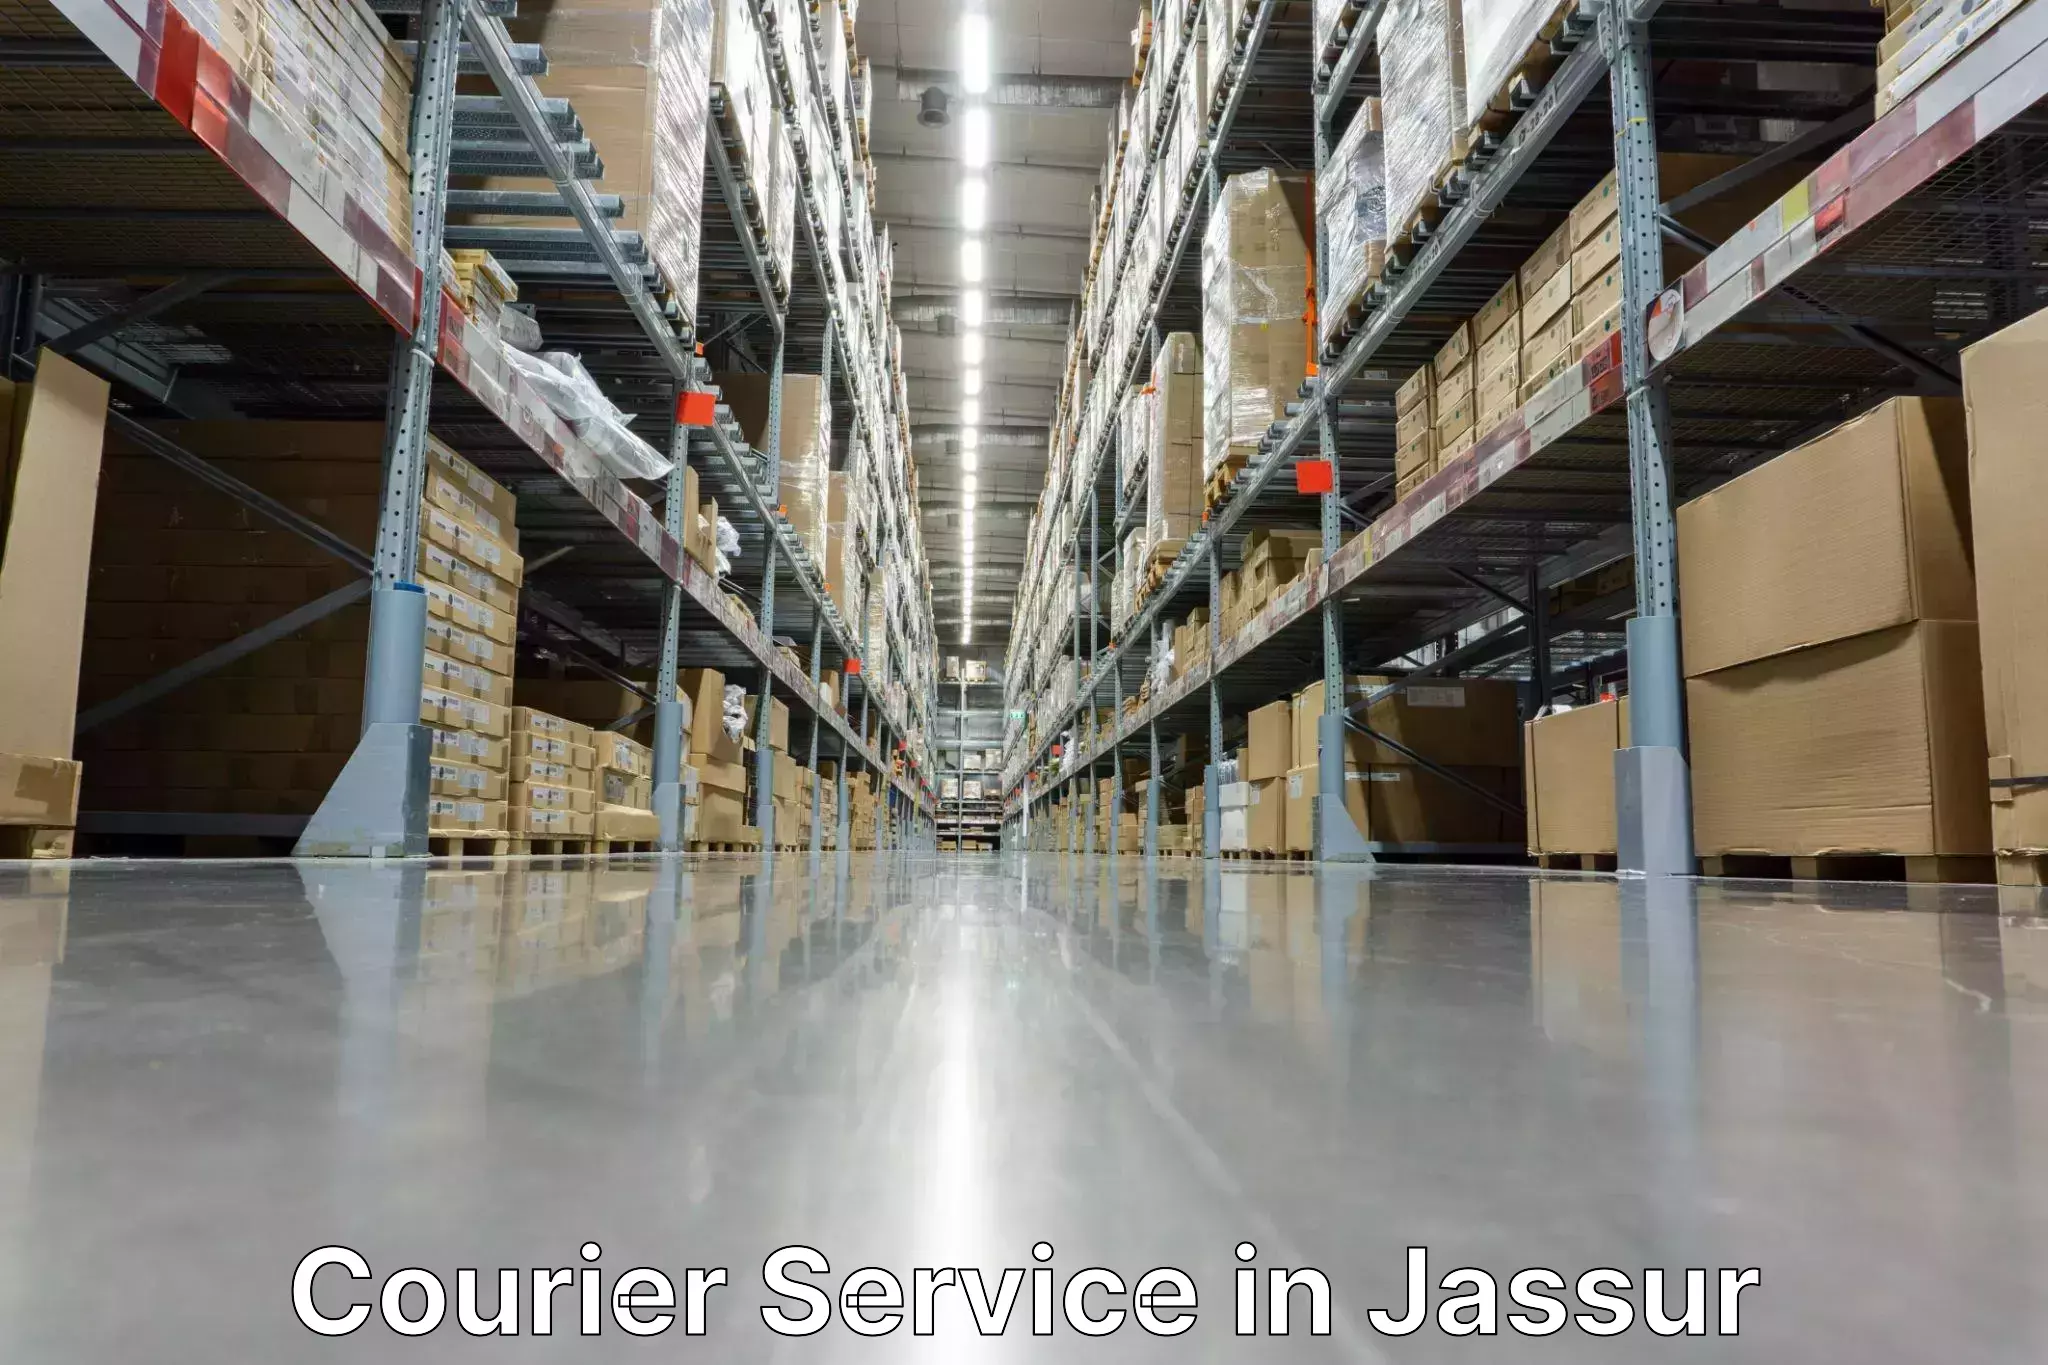 Premium courier solutions in Jassur